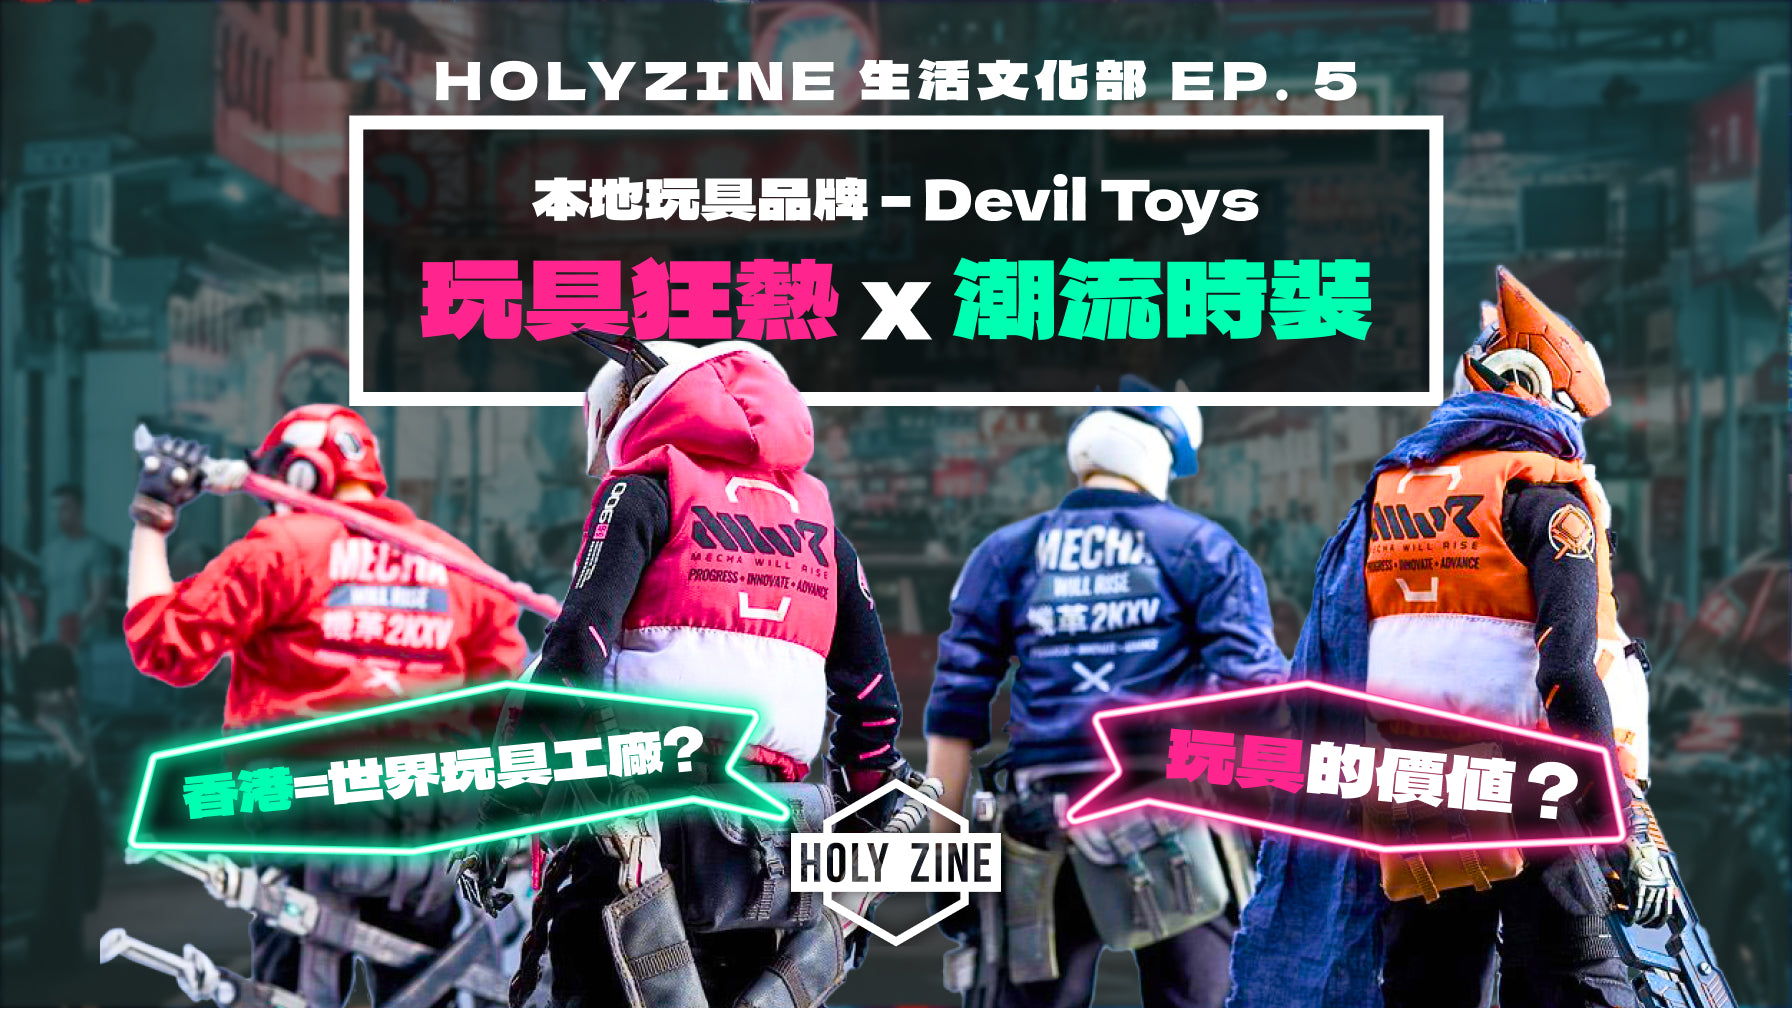 【Holyzine - 文化生活部EP5 ‧ 香港=世界玩具工廠？潮流與玩具 – 本地玩具品牌 Devil Toys】